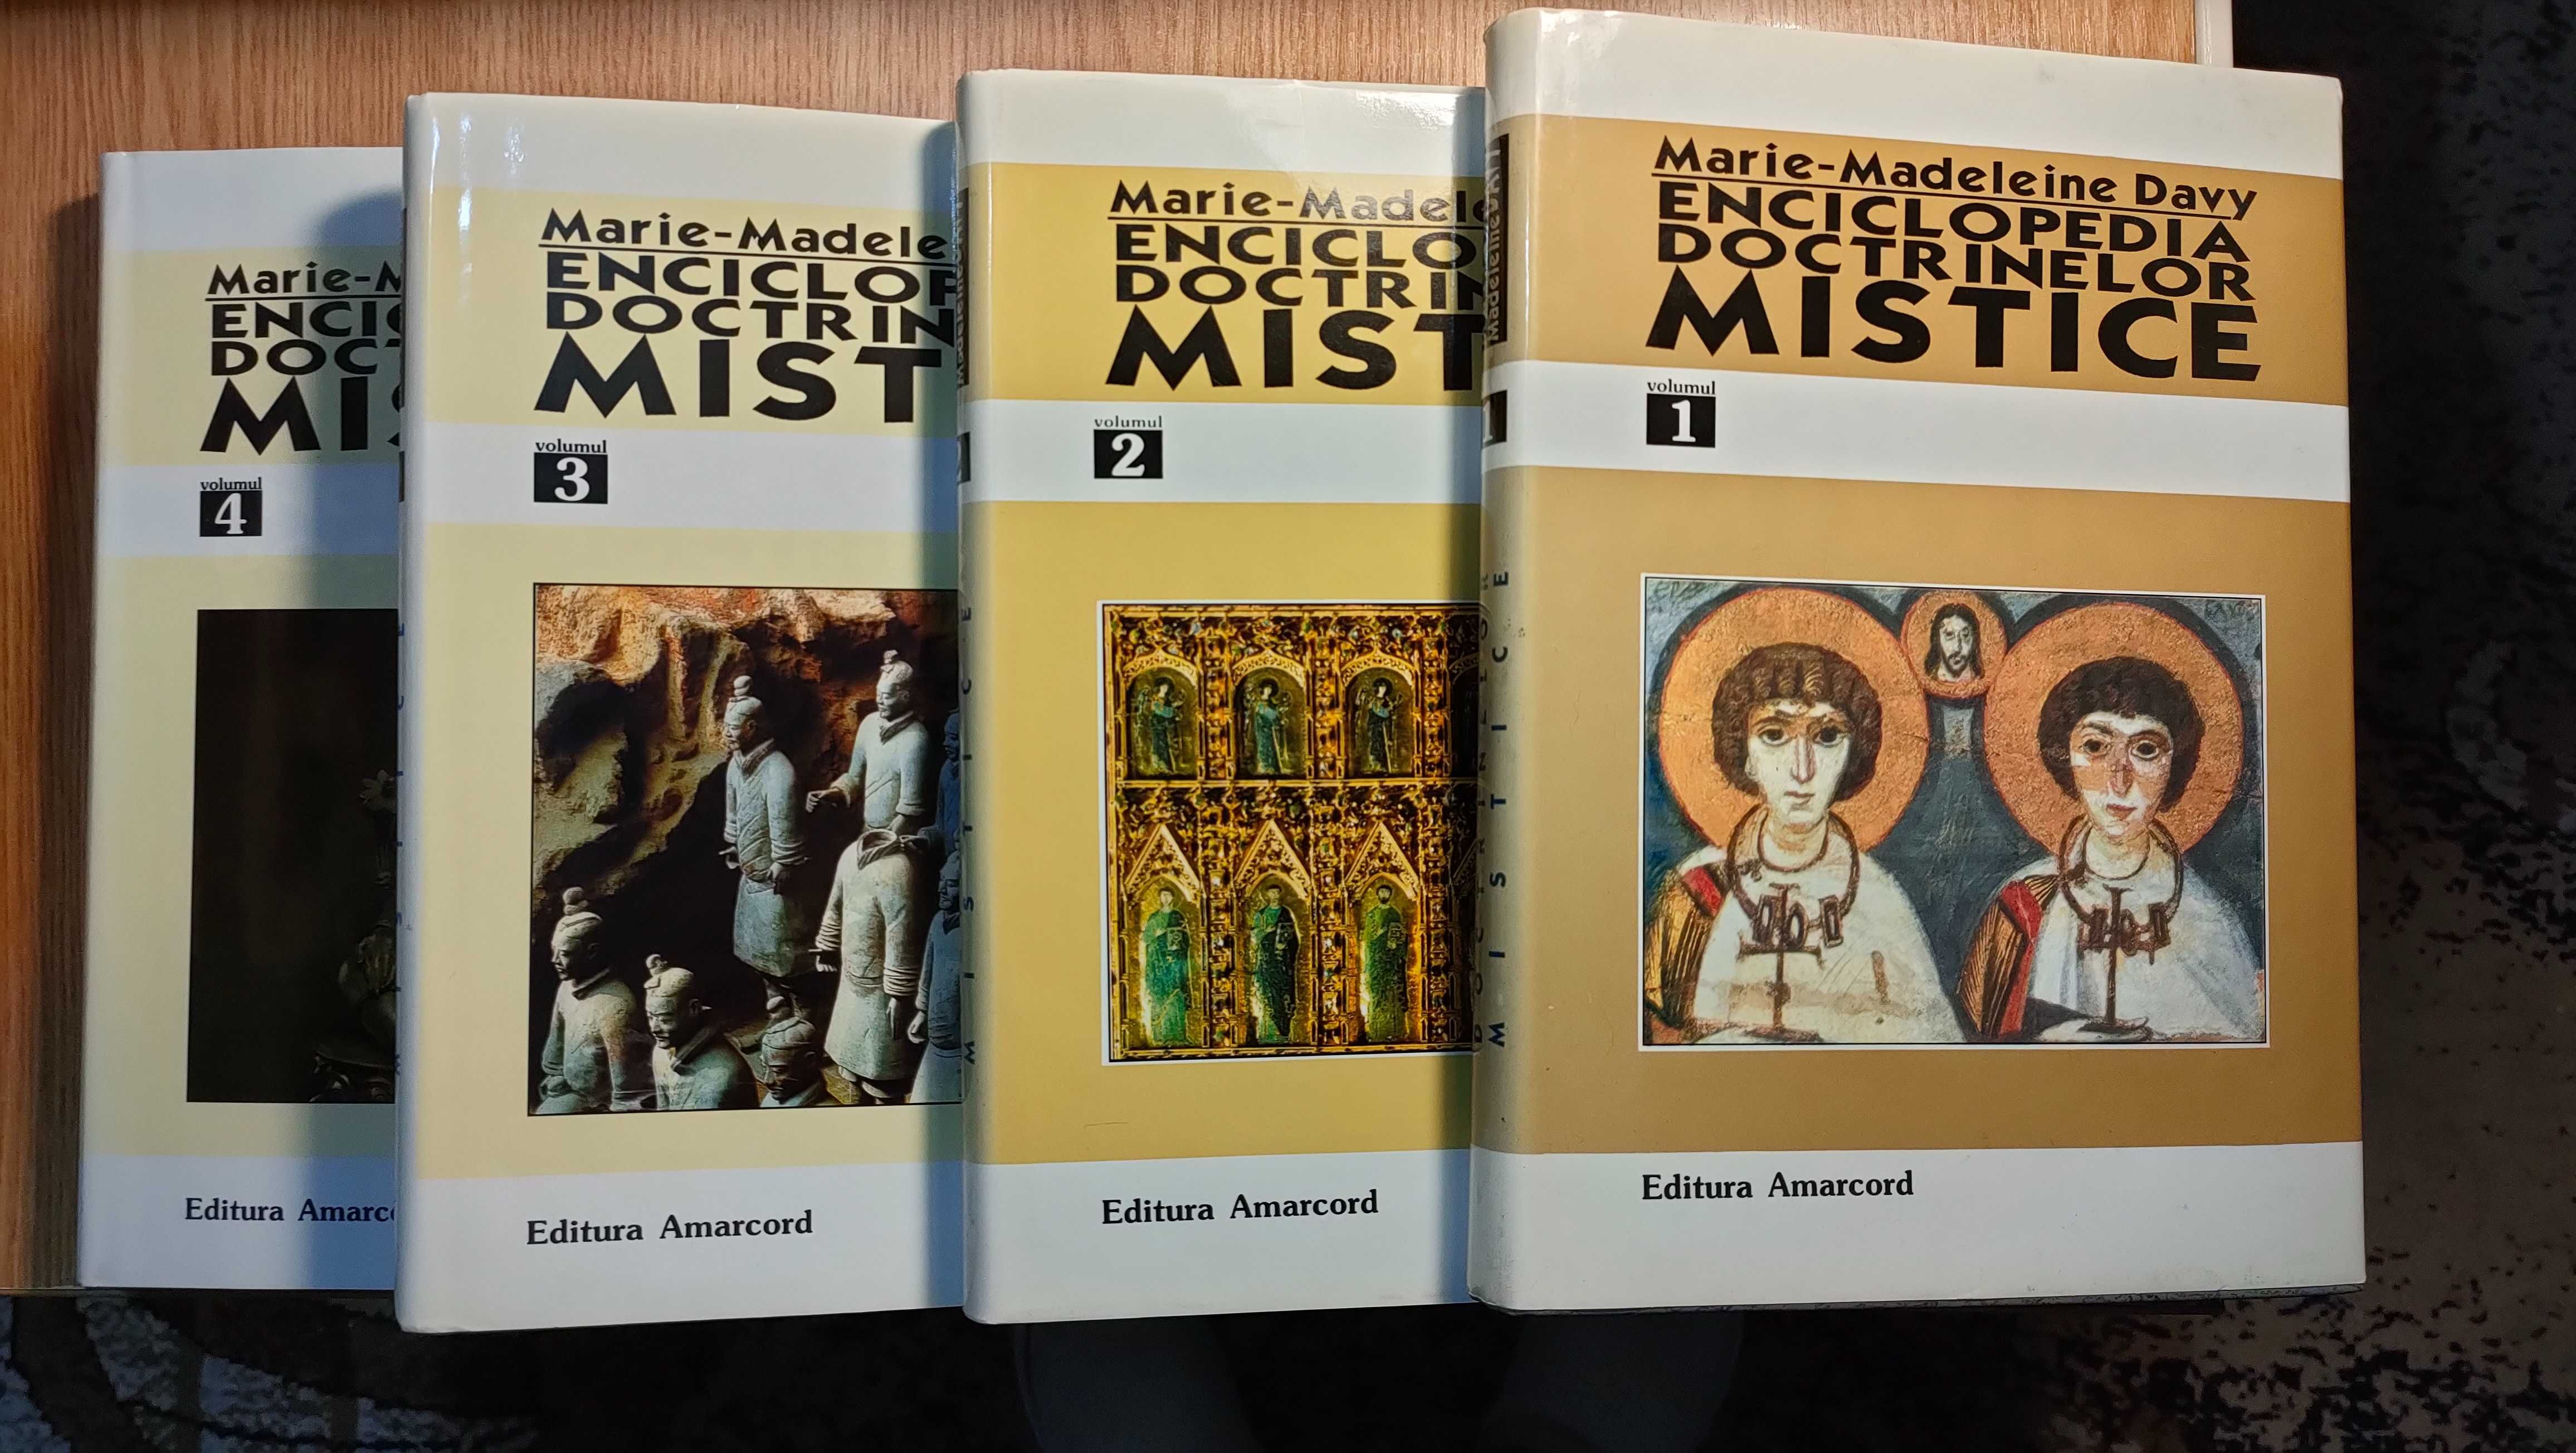 Enciclopedia doctrinelor mistice - Marie-Madeleine Davy - 4 volume